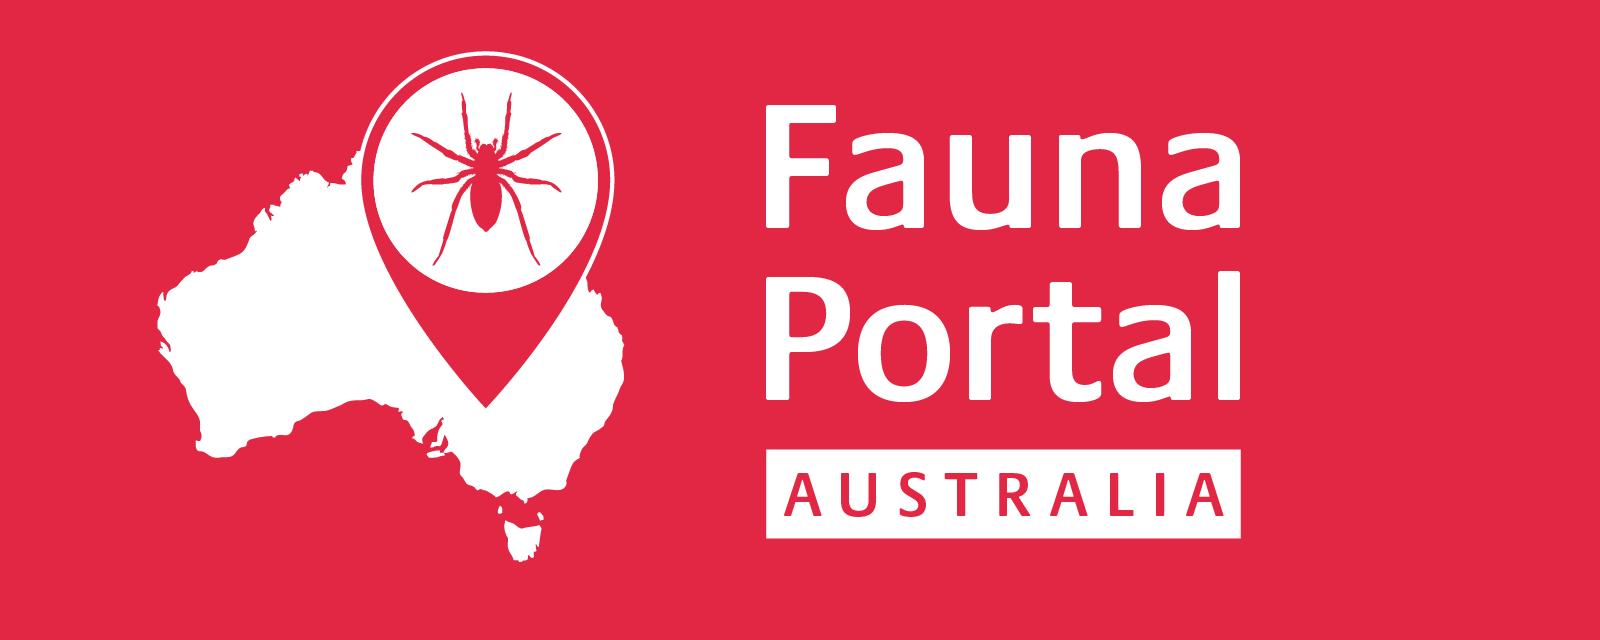 Fauna Portal Australia: discover undescribed species from Australia